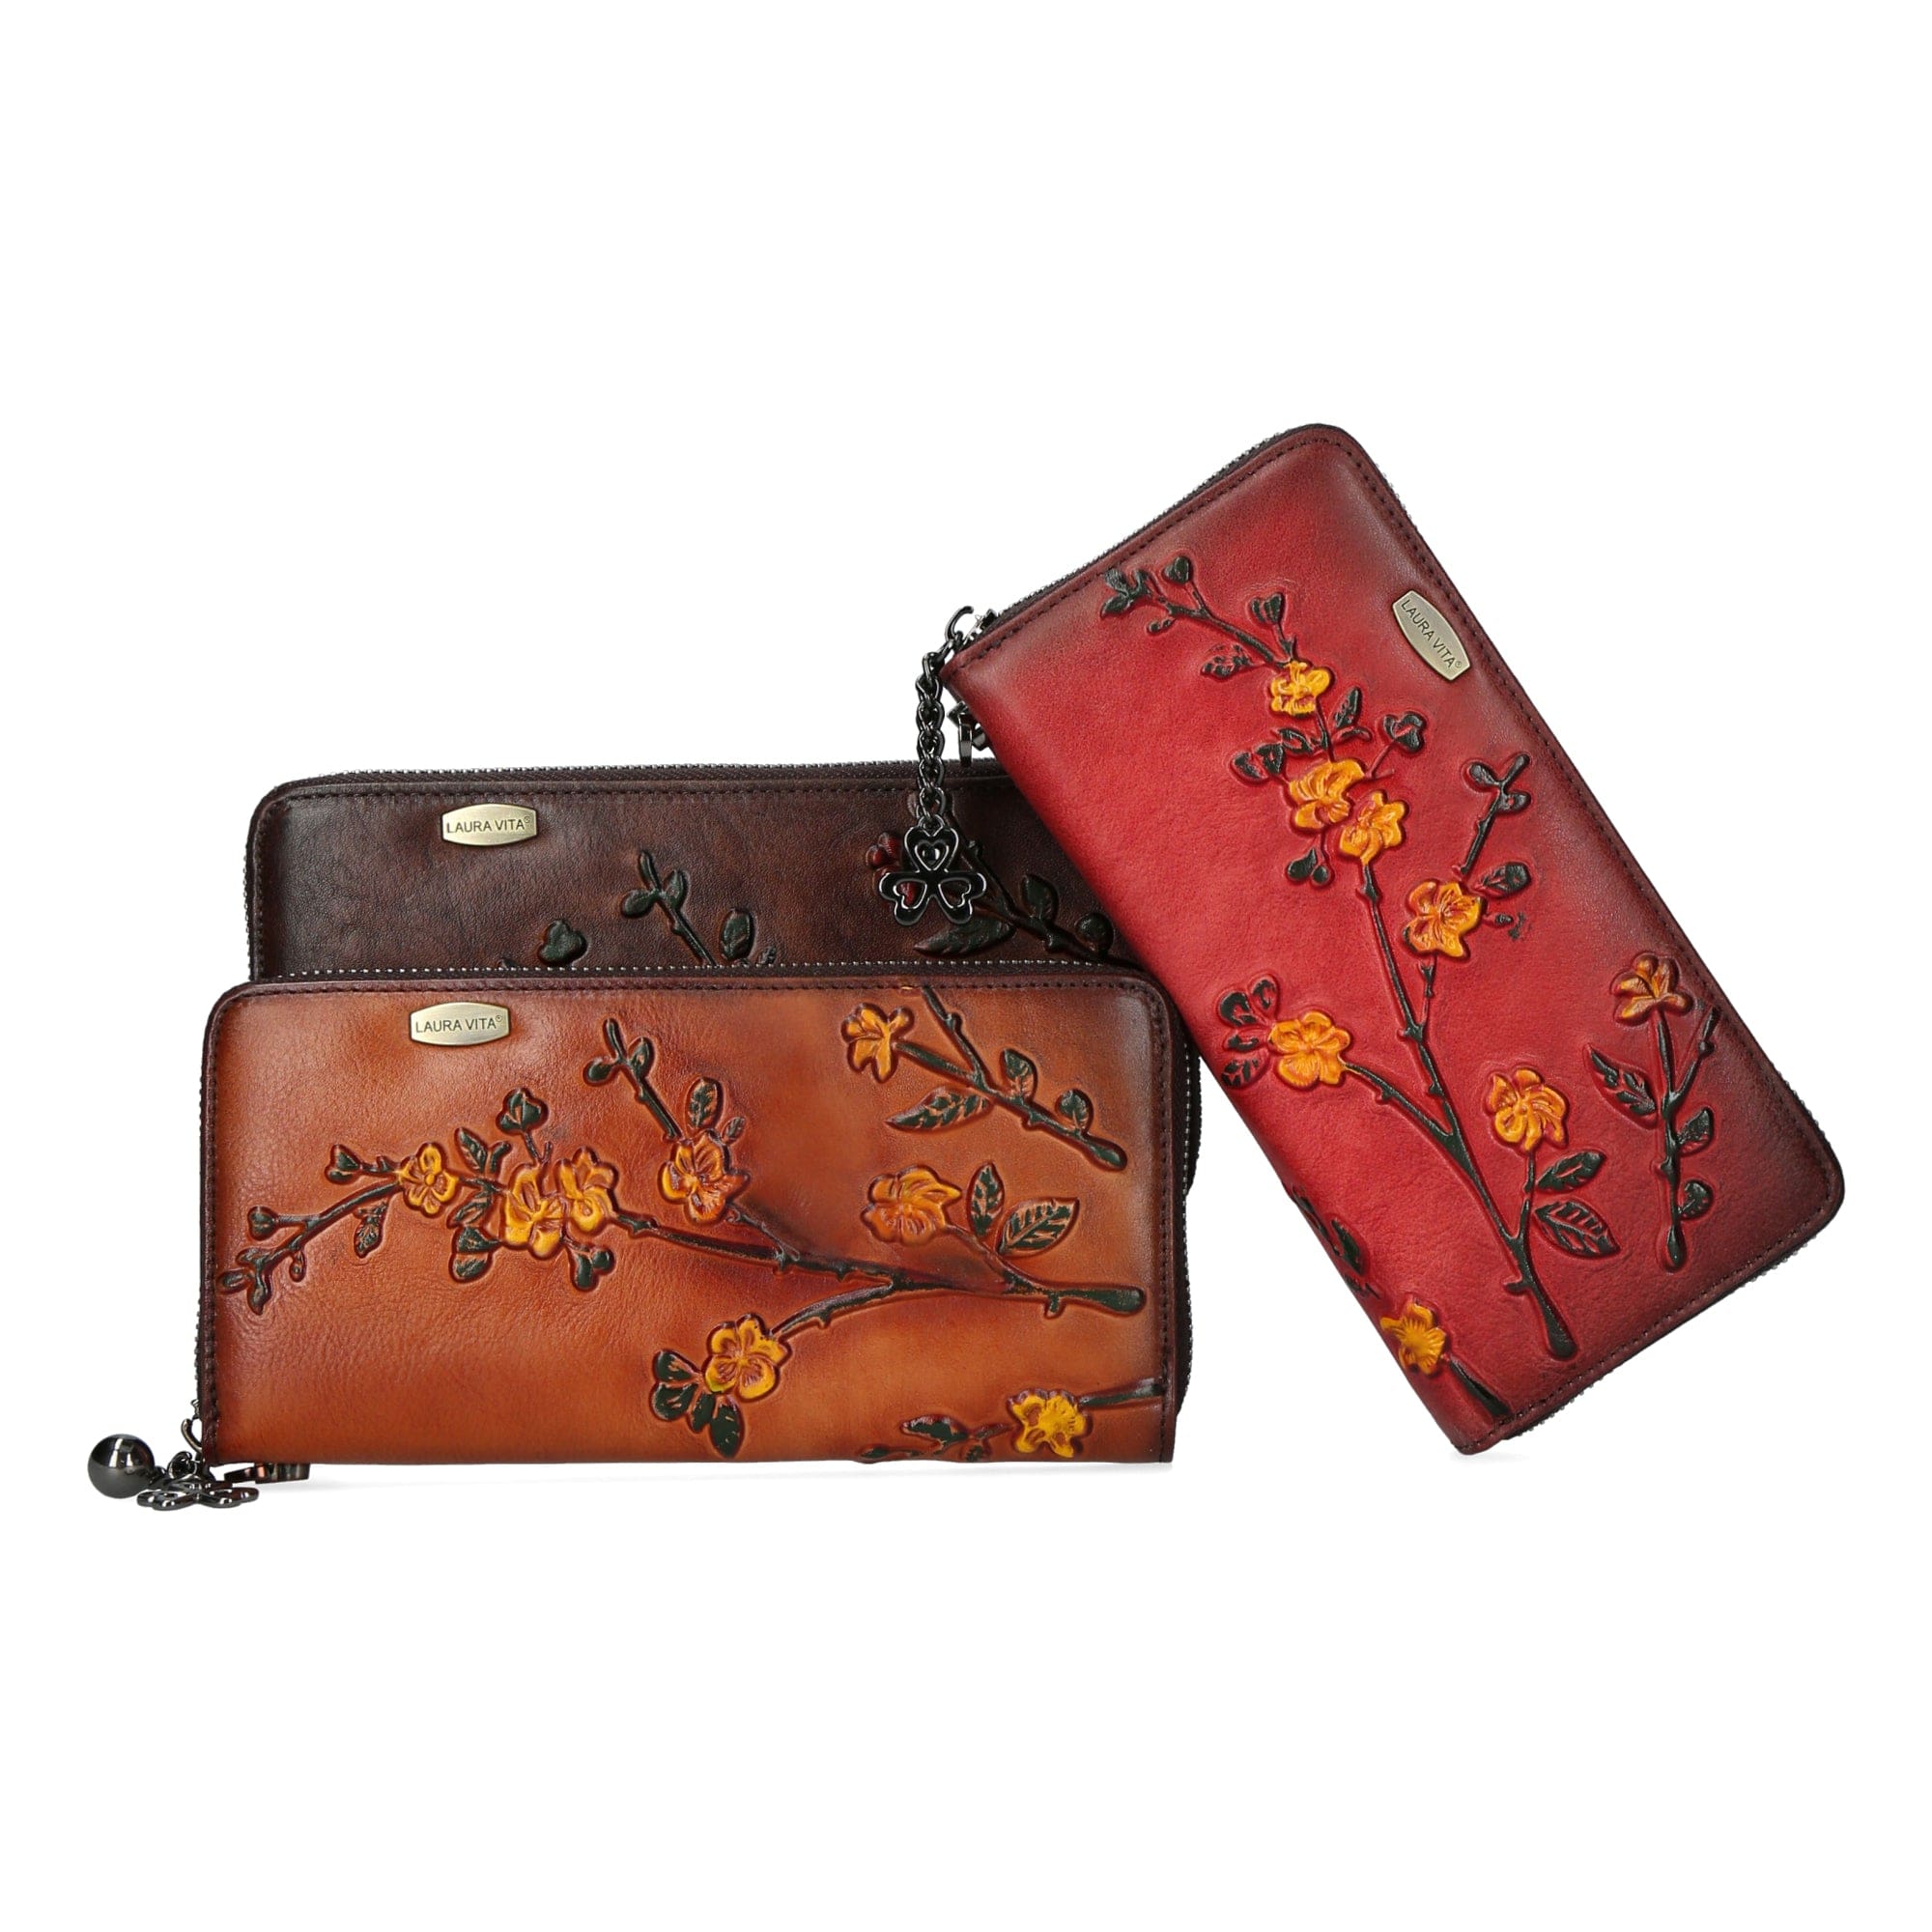 Natasha wallet - Small leather goods